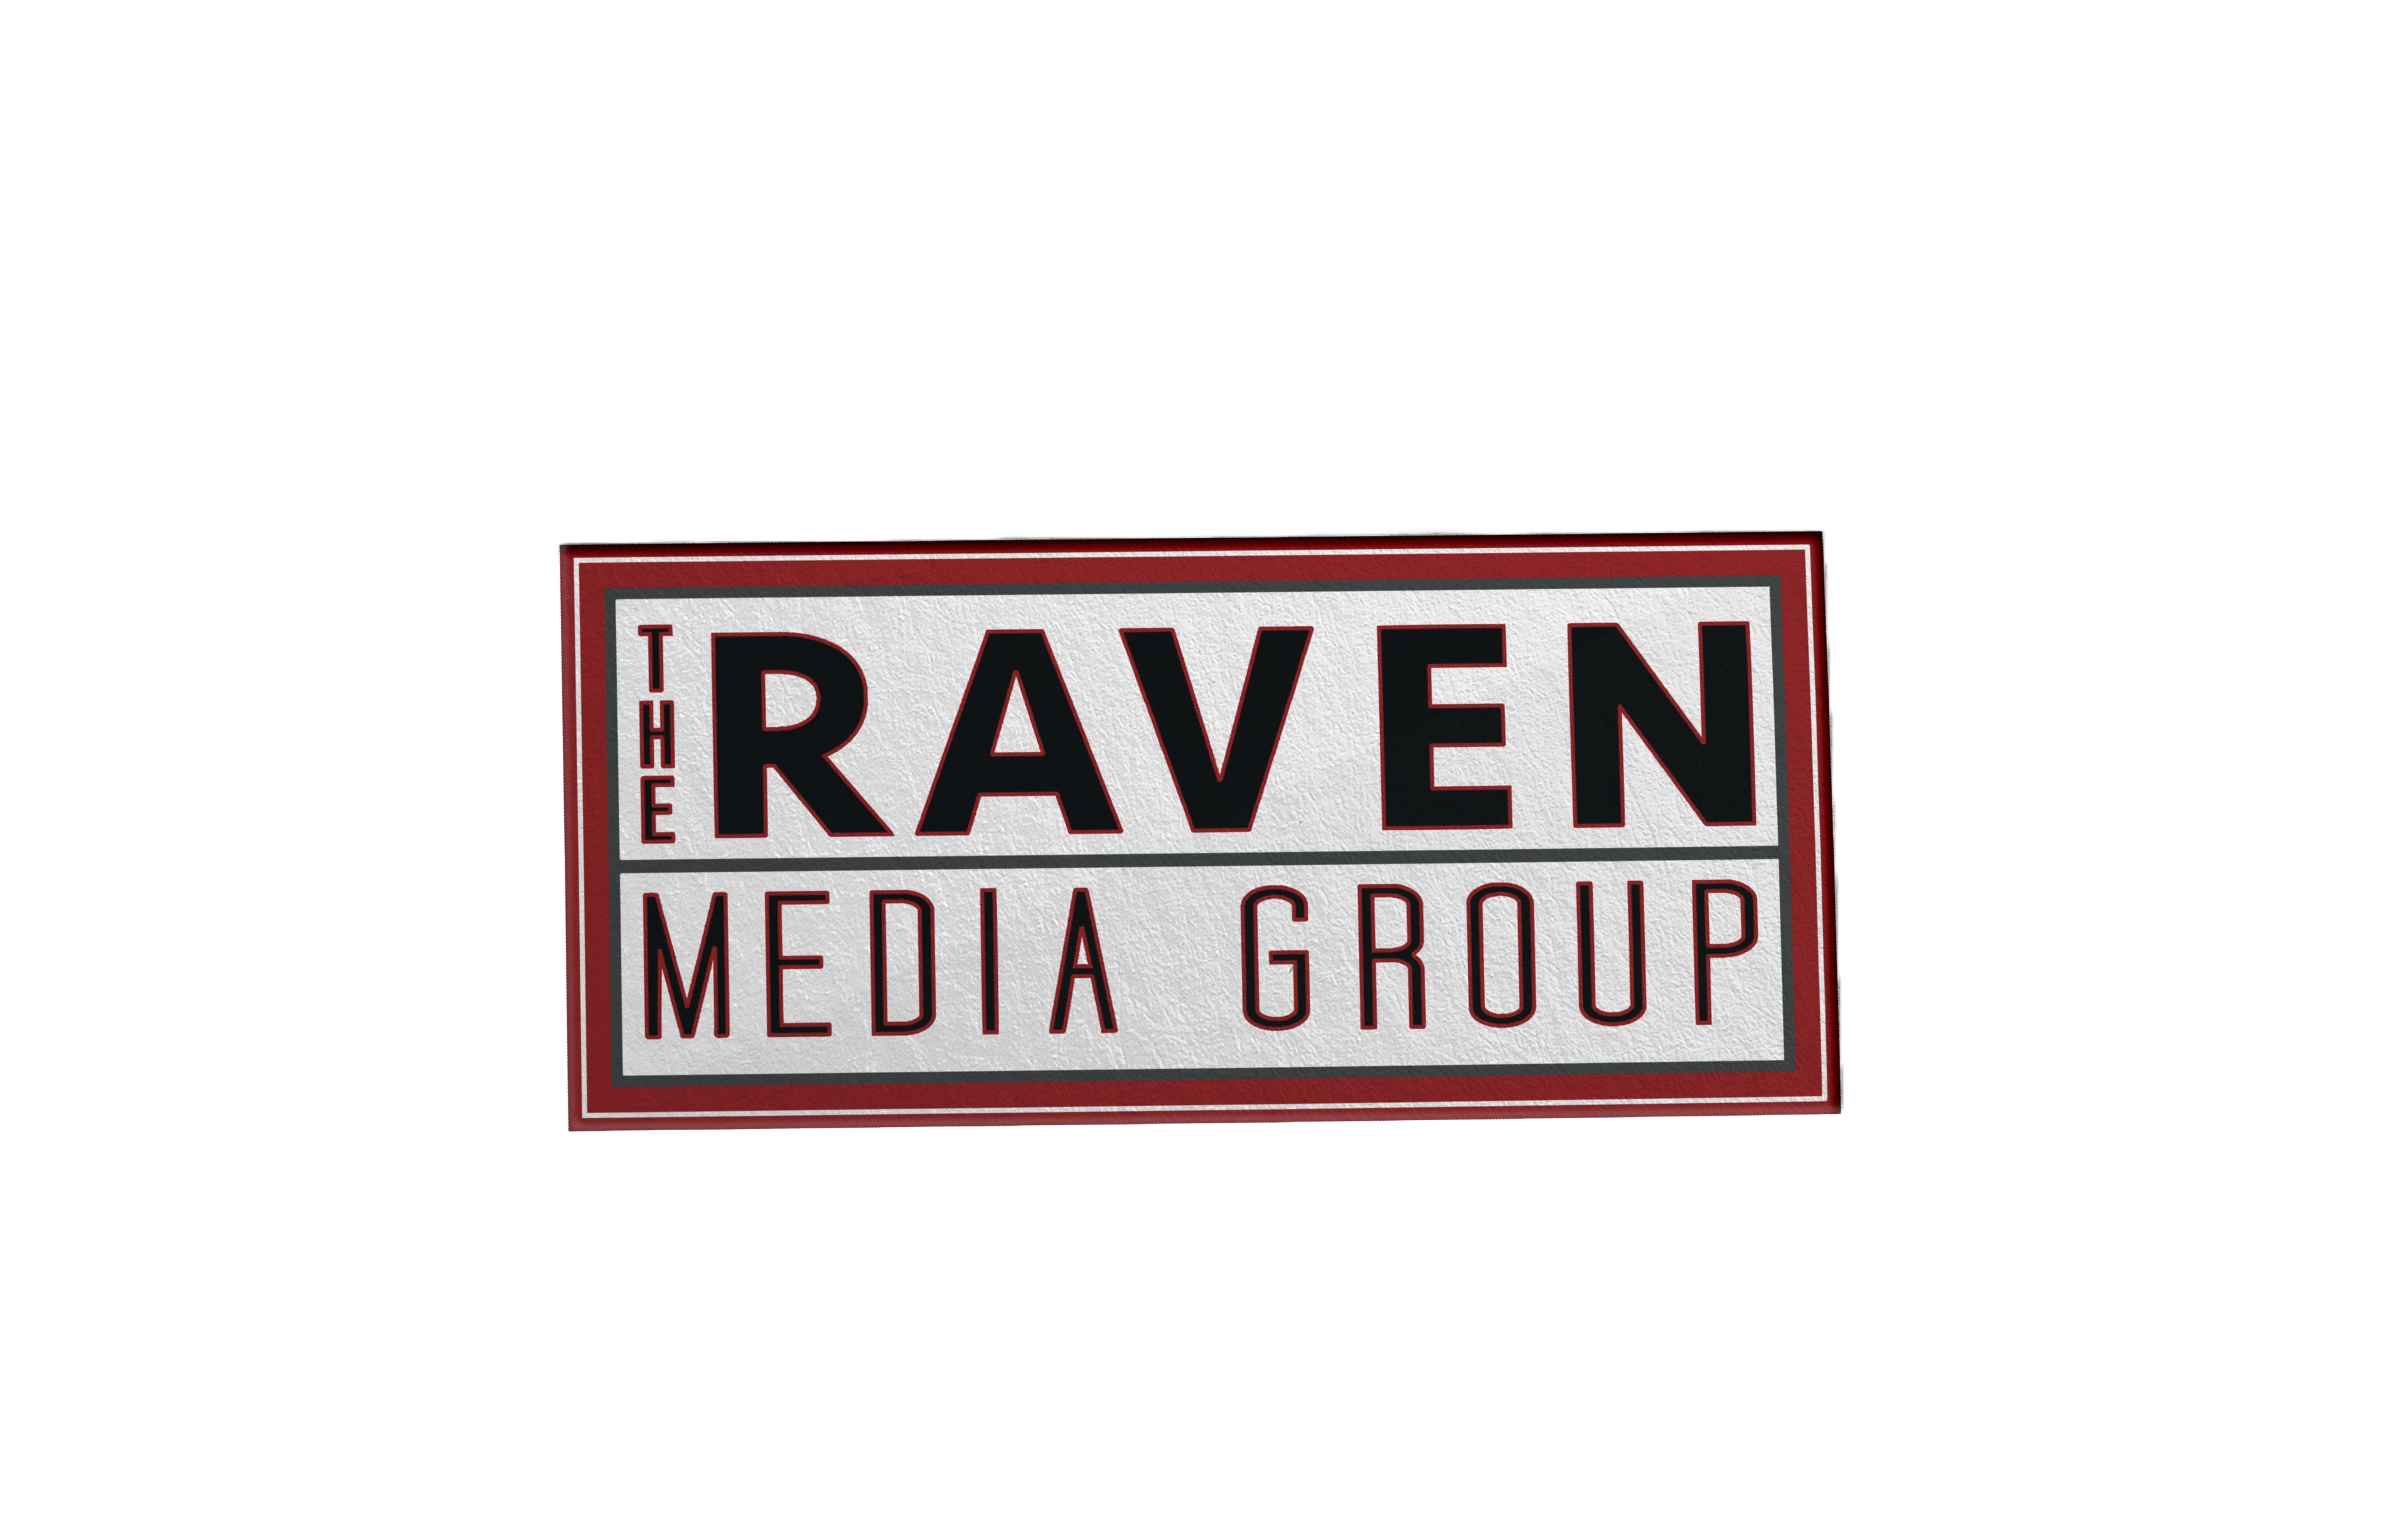 The Raven Media Group